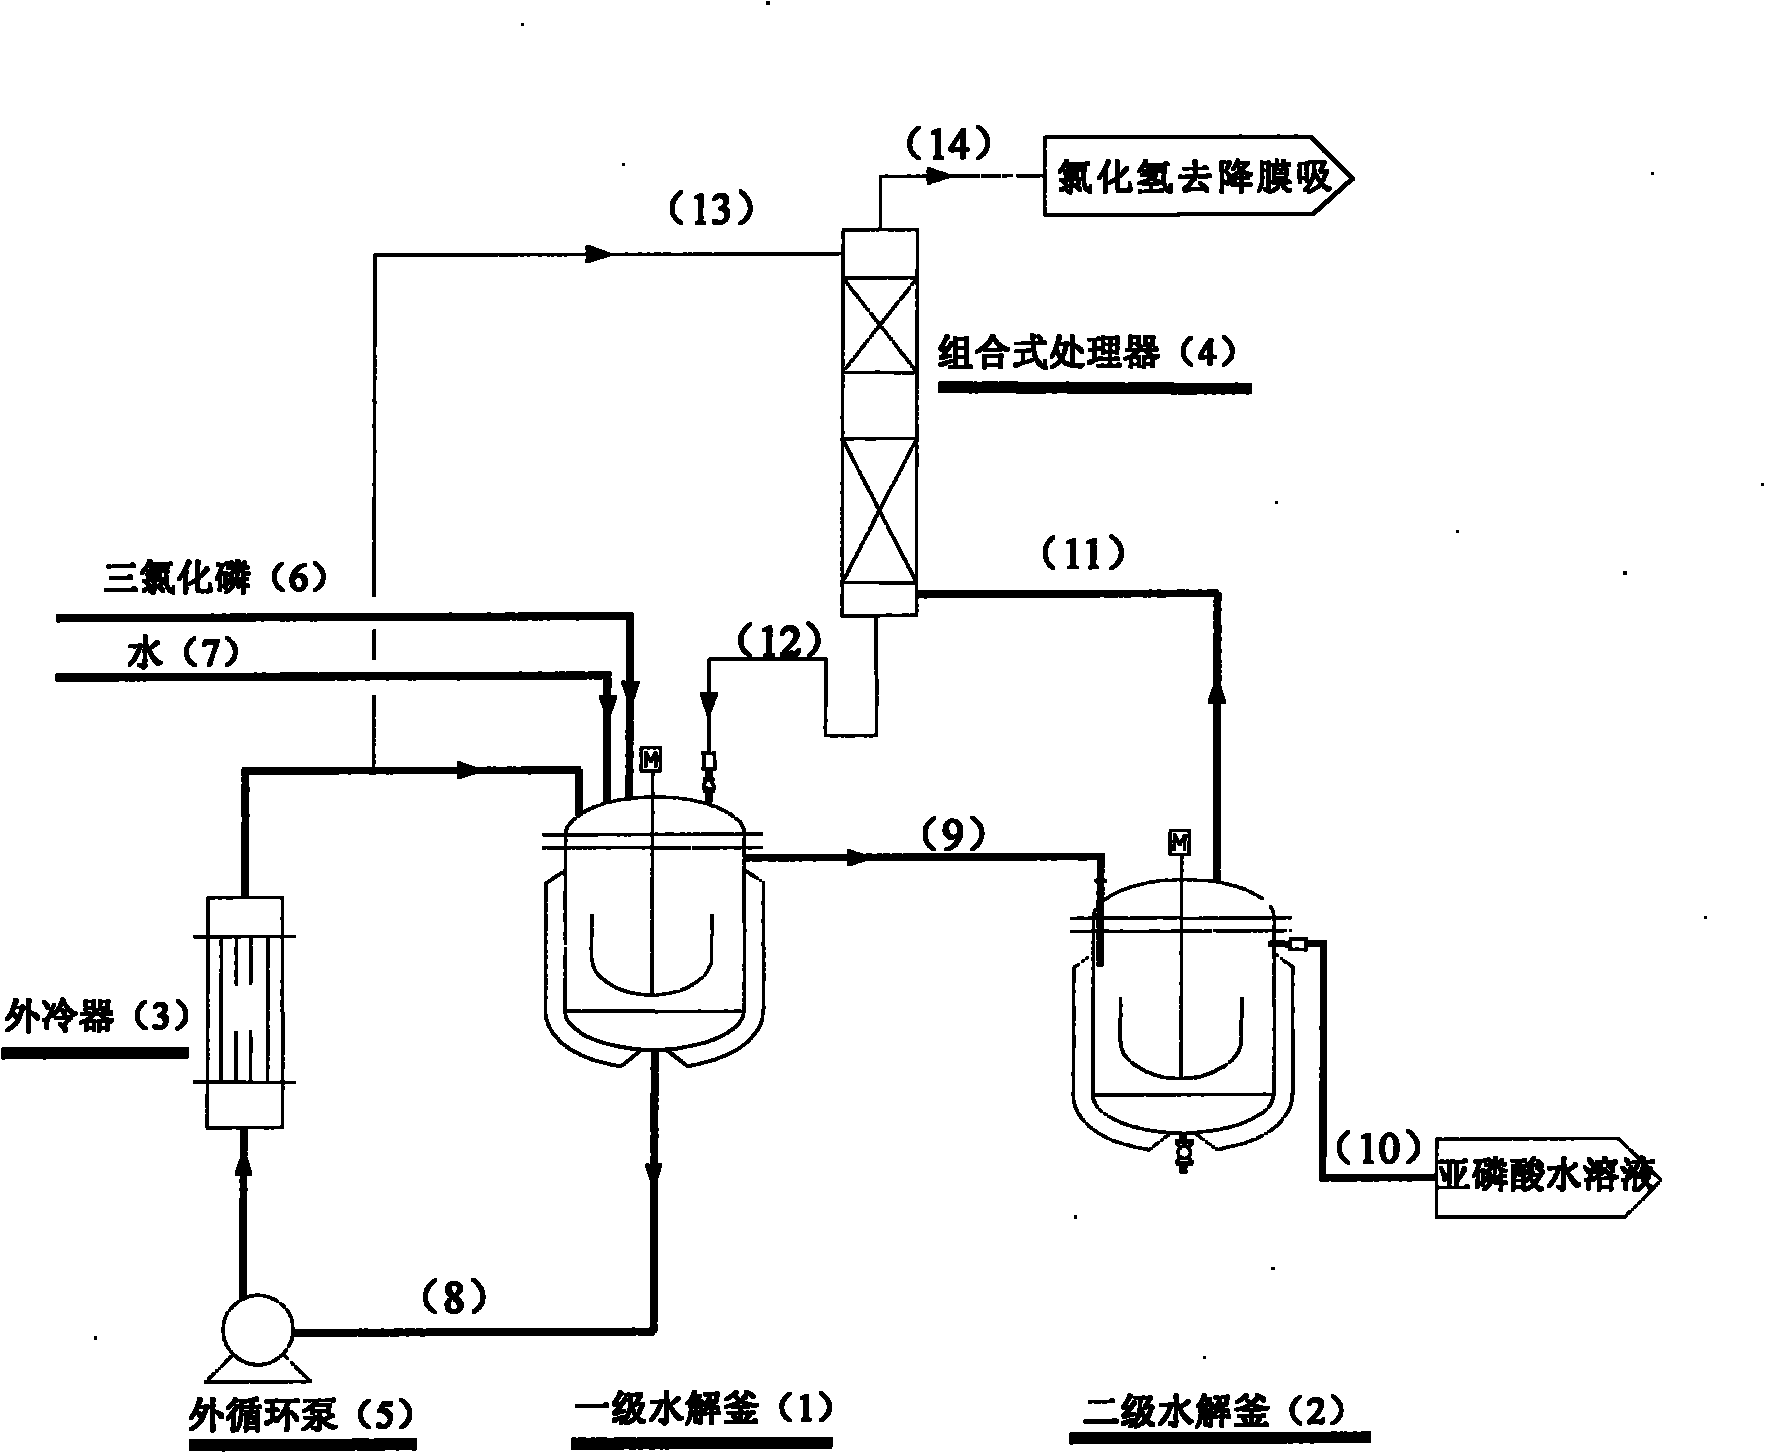 Method for continuously synthesizing phosphorous acid